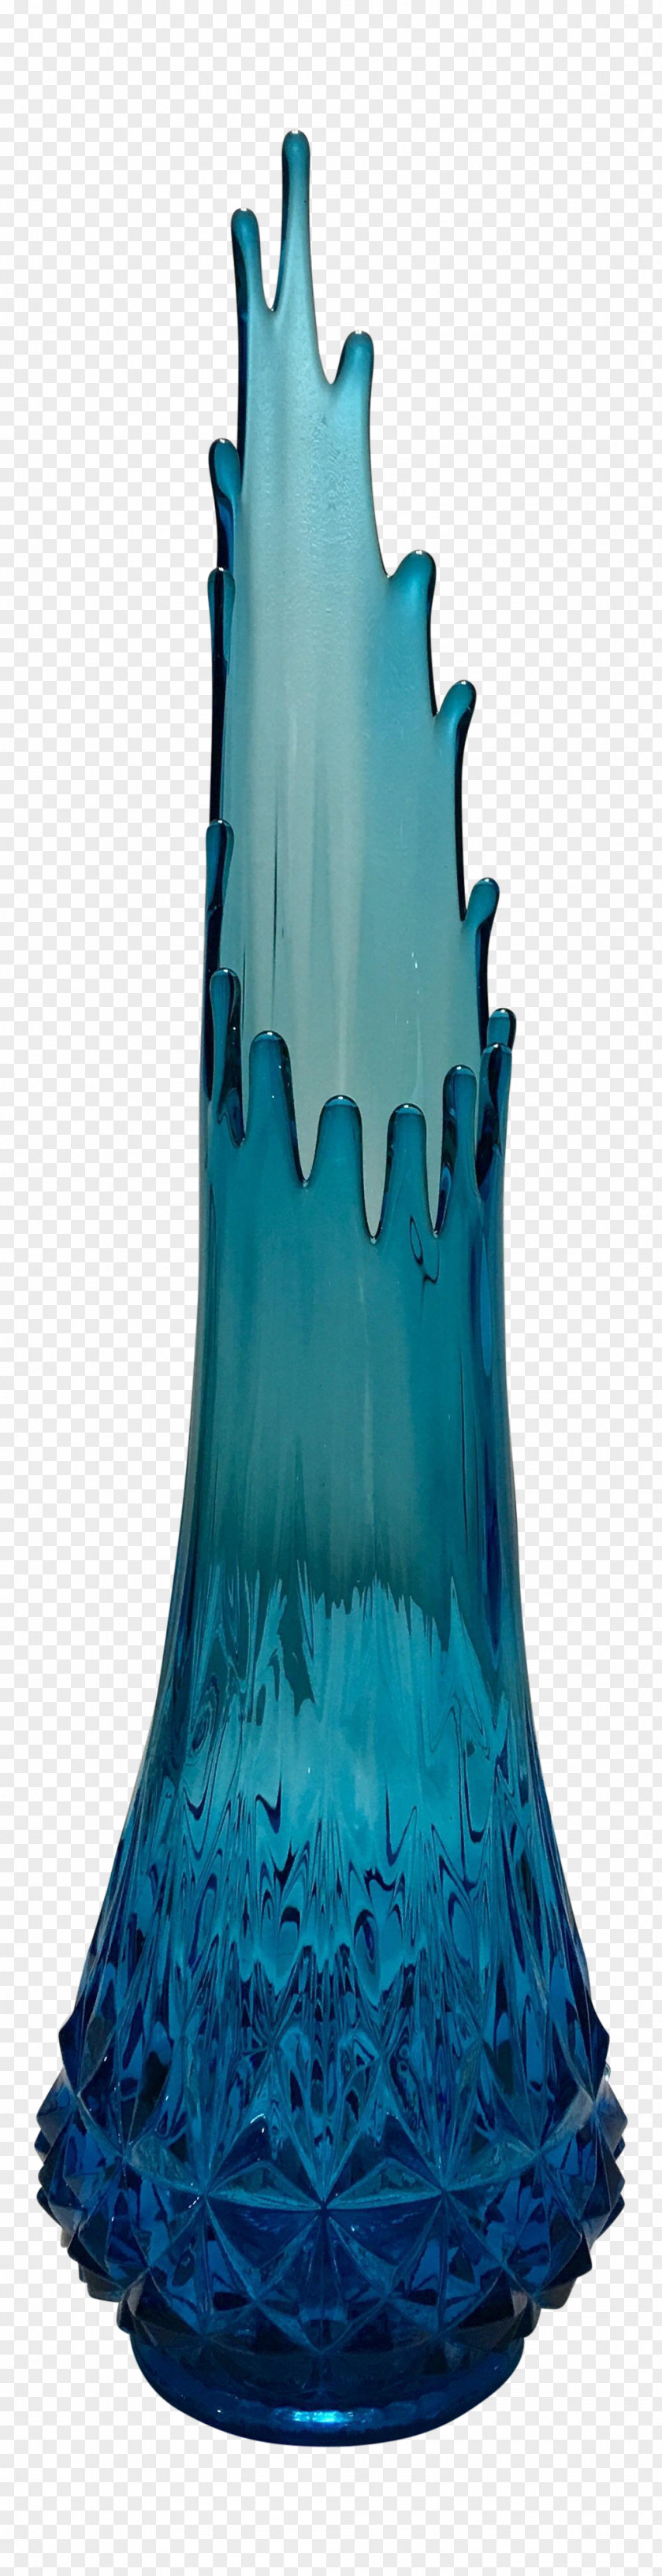 Vase Glass Blue Chairish Vikings PNG